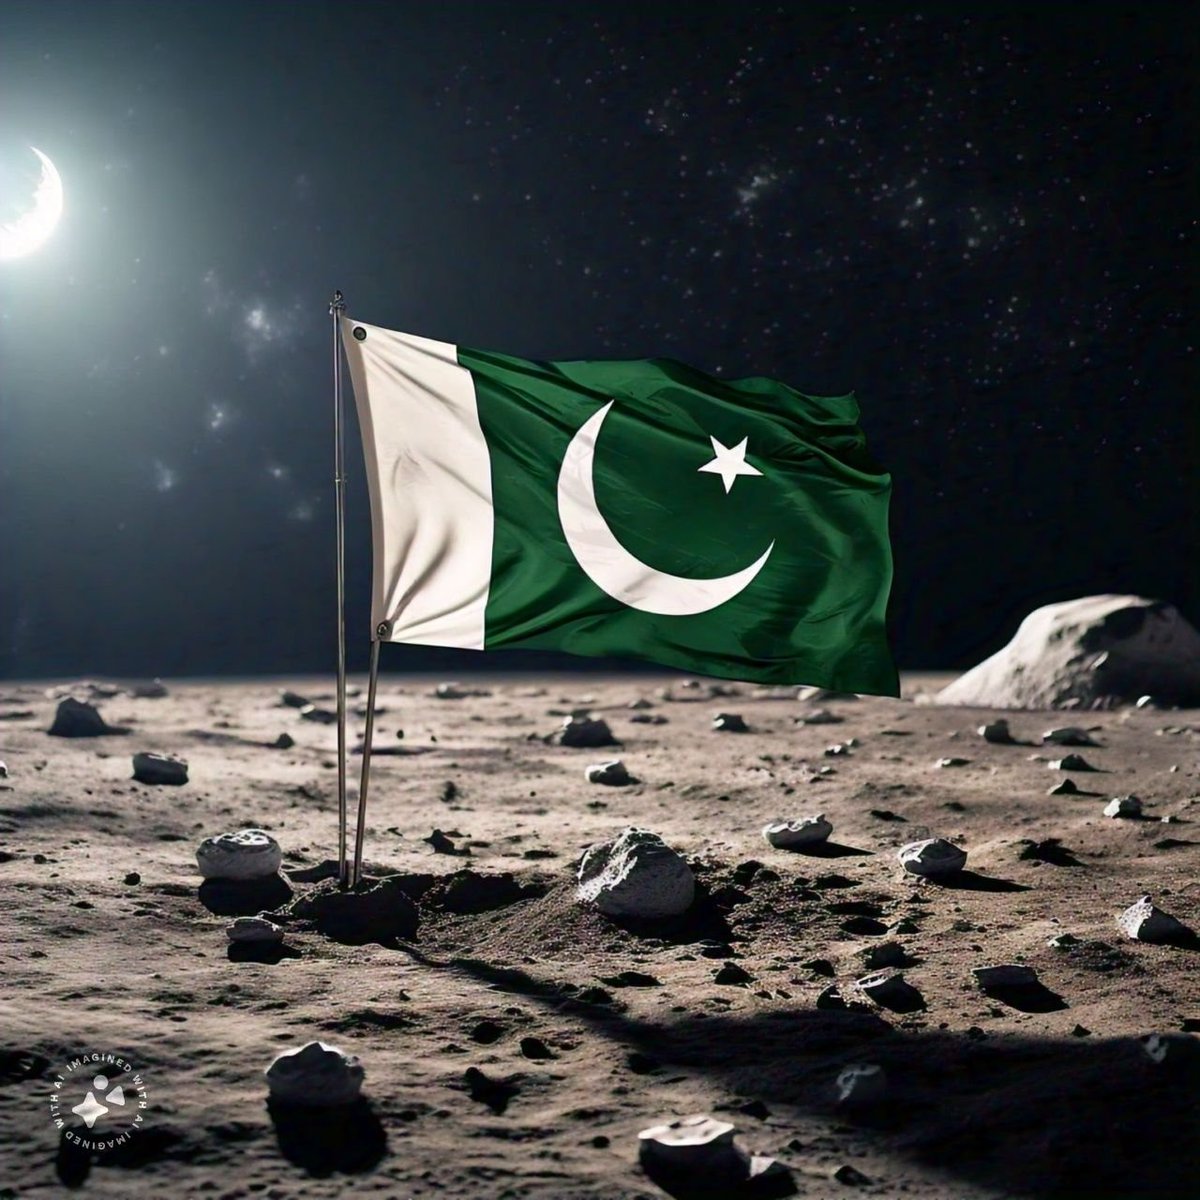 Just four more days In sha Allah😍💞 #PakistanLunarMission